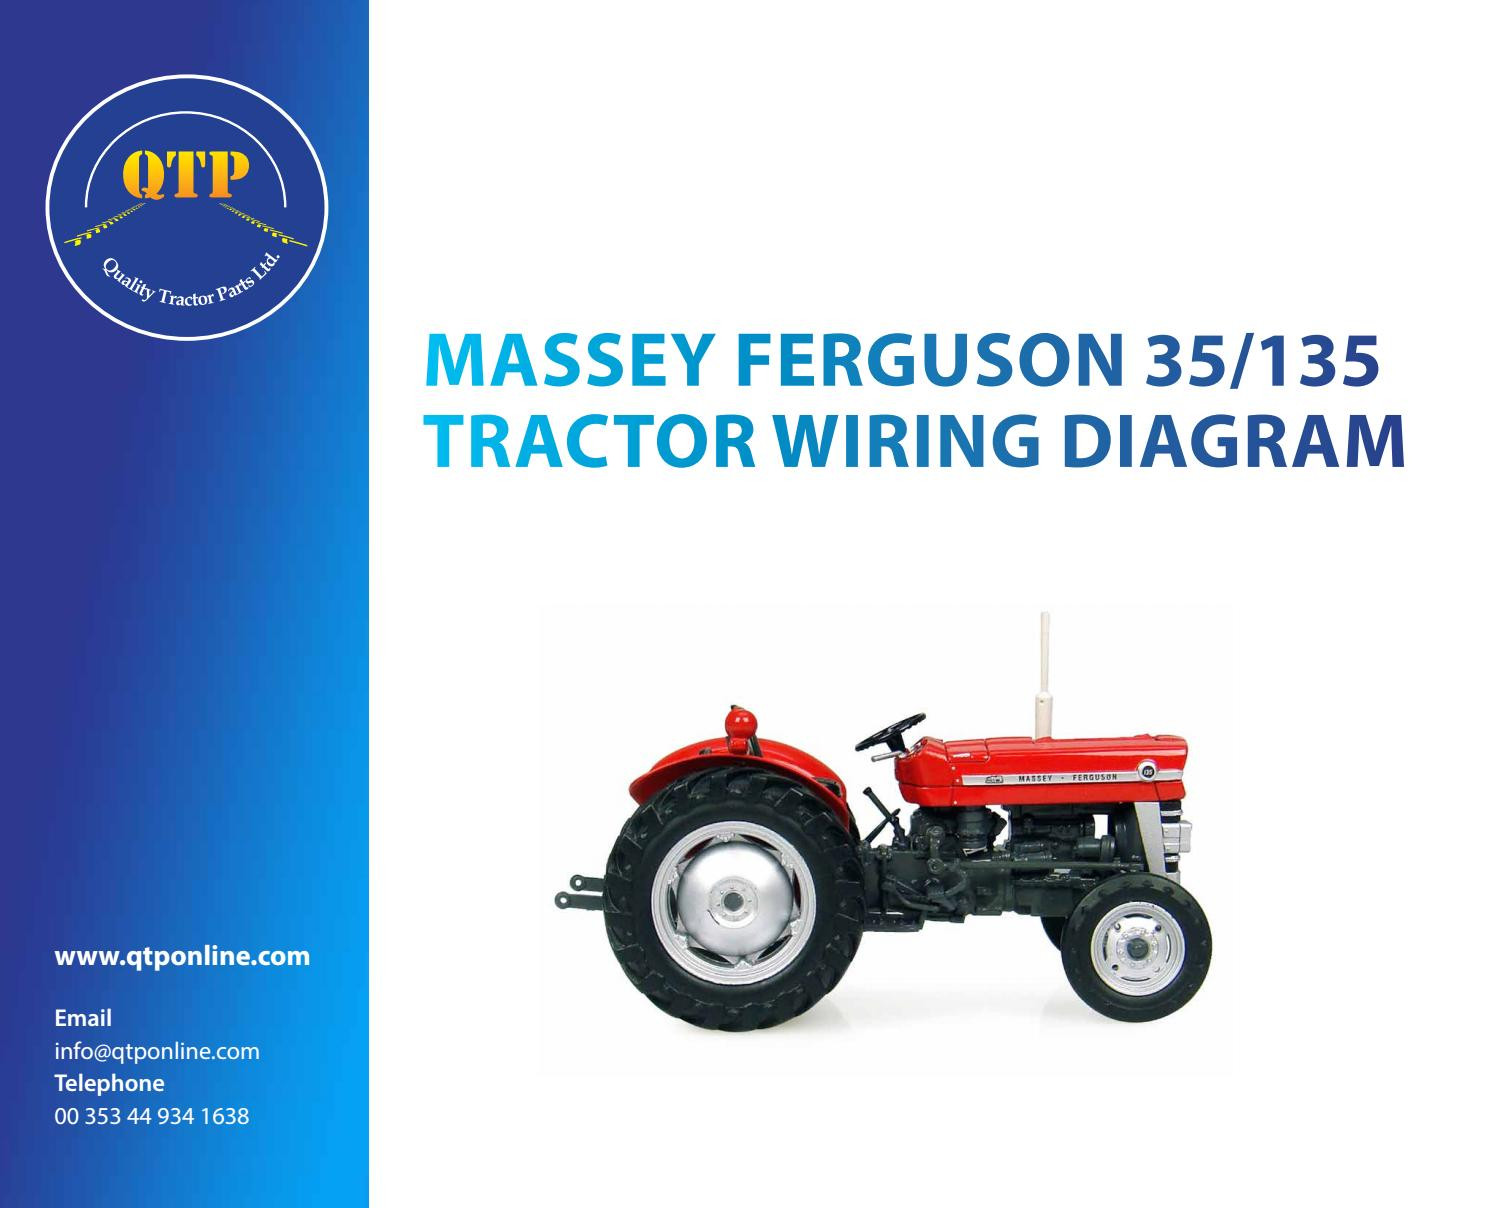 Mf 135 Desiel Key Switch Wireing 35/135 Wiring Diagram by Quality Tractor Parts – issuu Of Mf 135 Desiel Key Switch Wireing